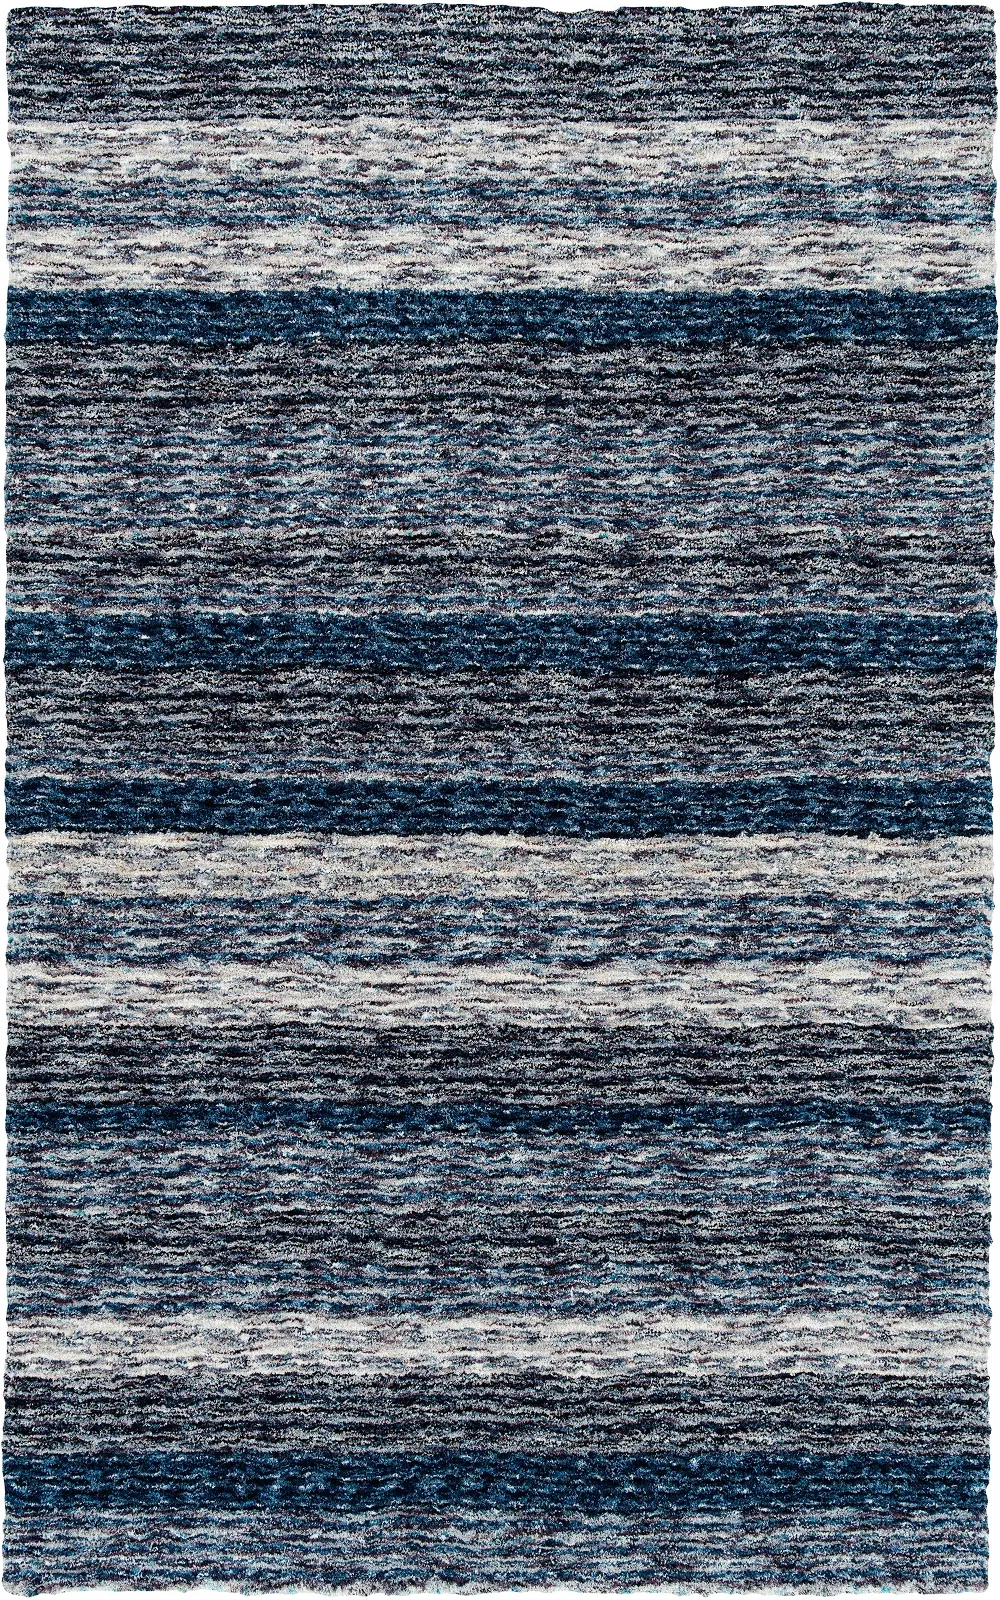 JP1IN5X8/JOPLIN-RUG Joplin 5 x 8 Striped Shag Indigo Blue Area Rug-1